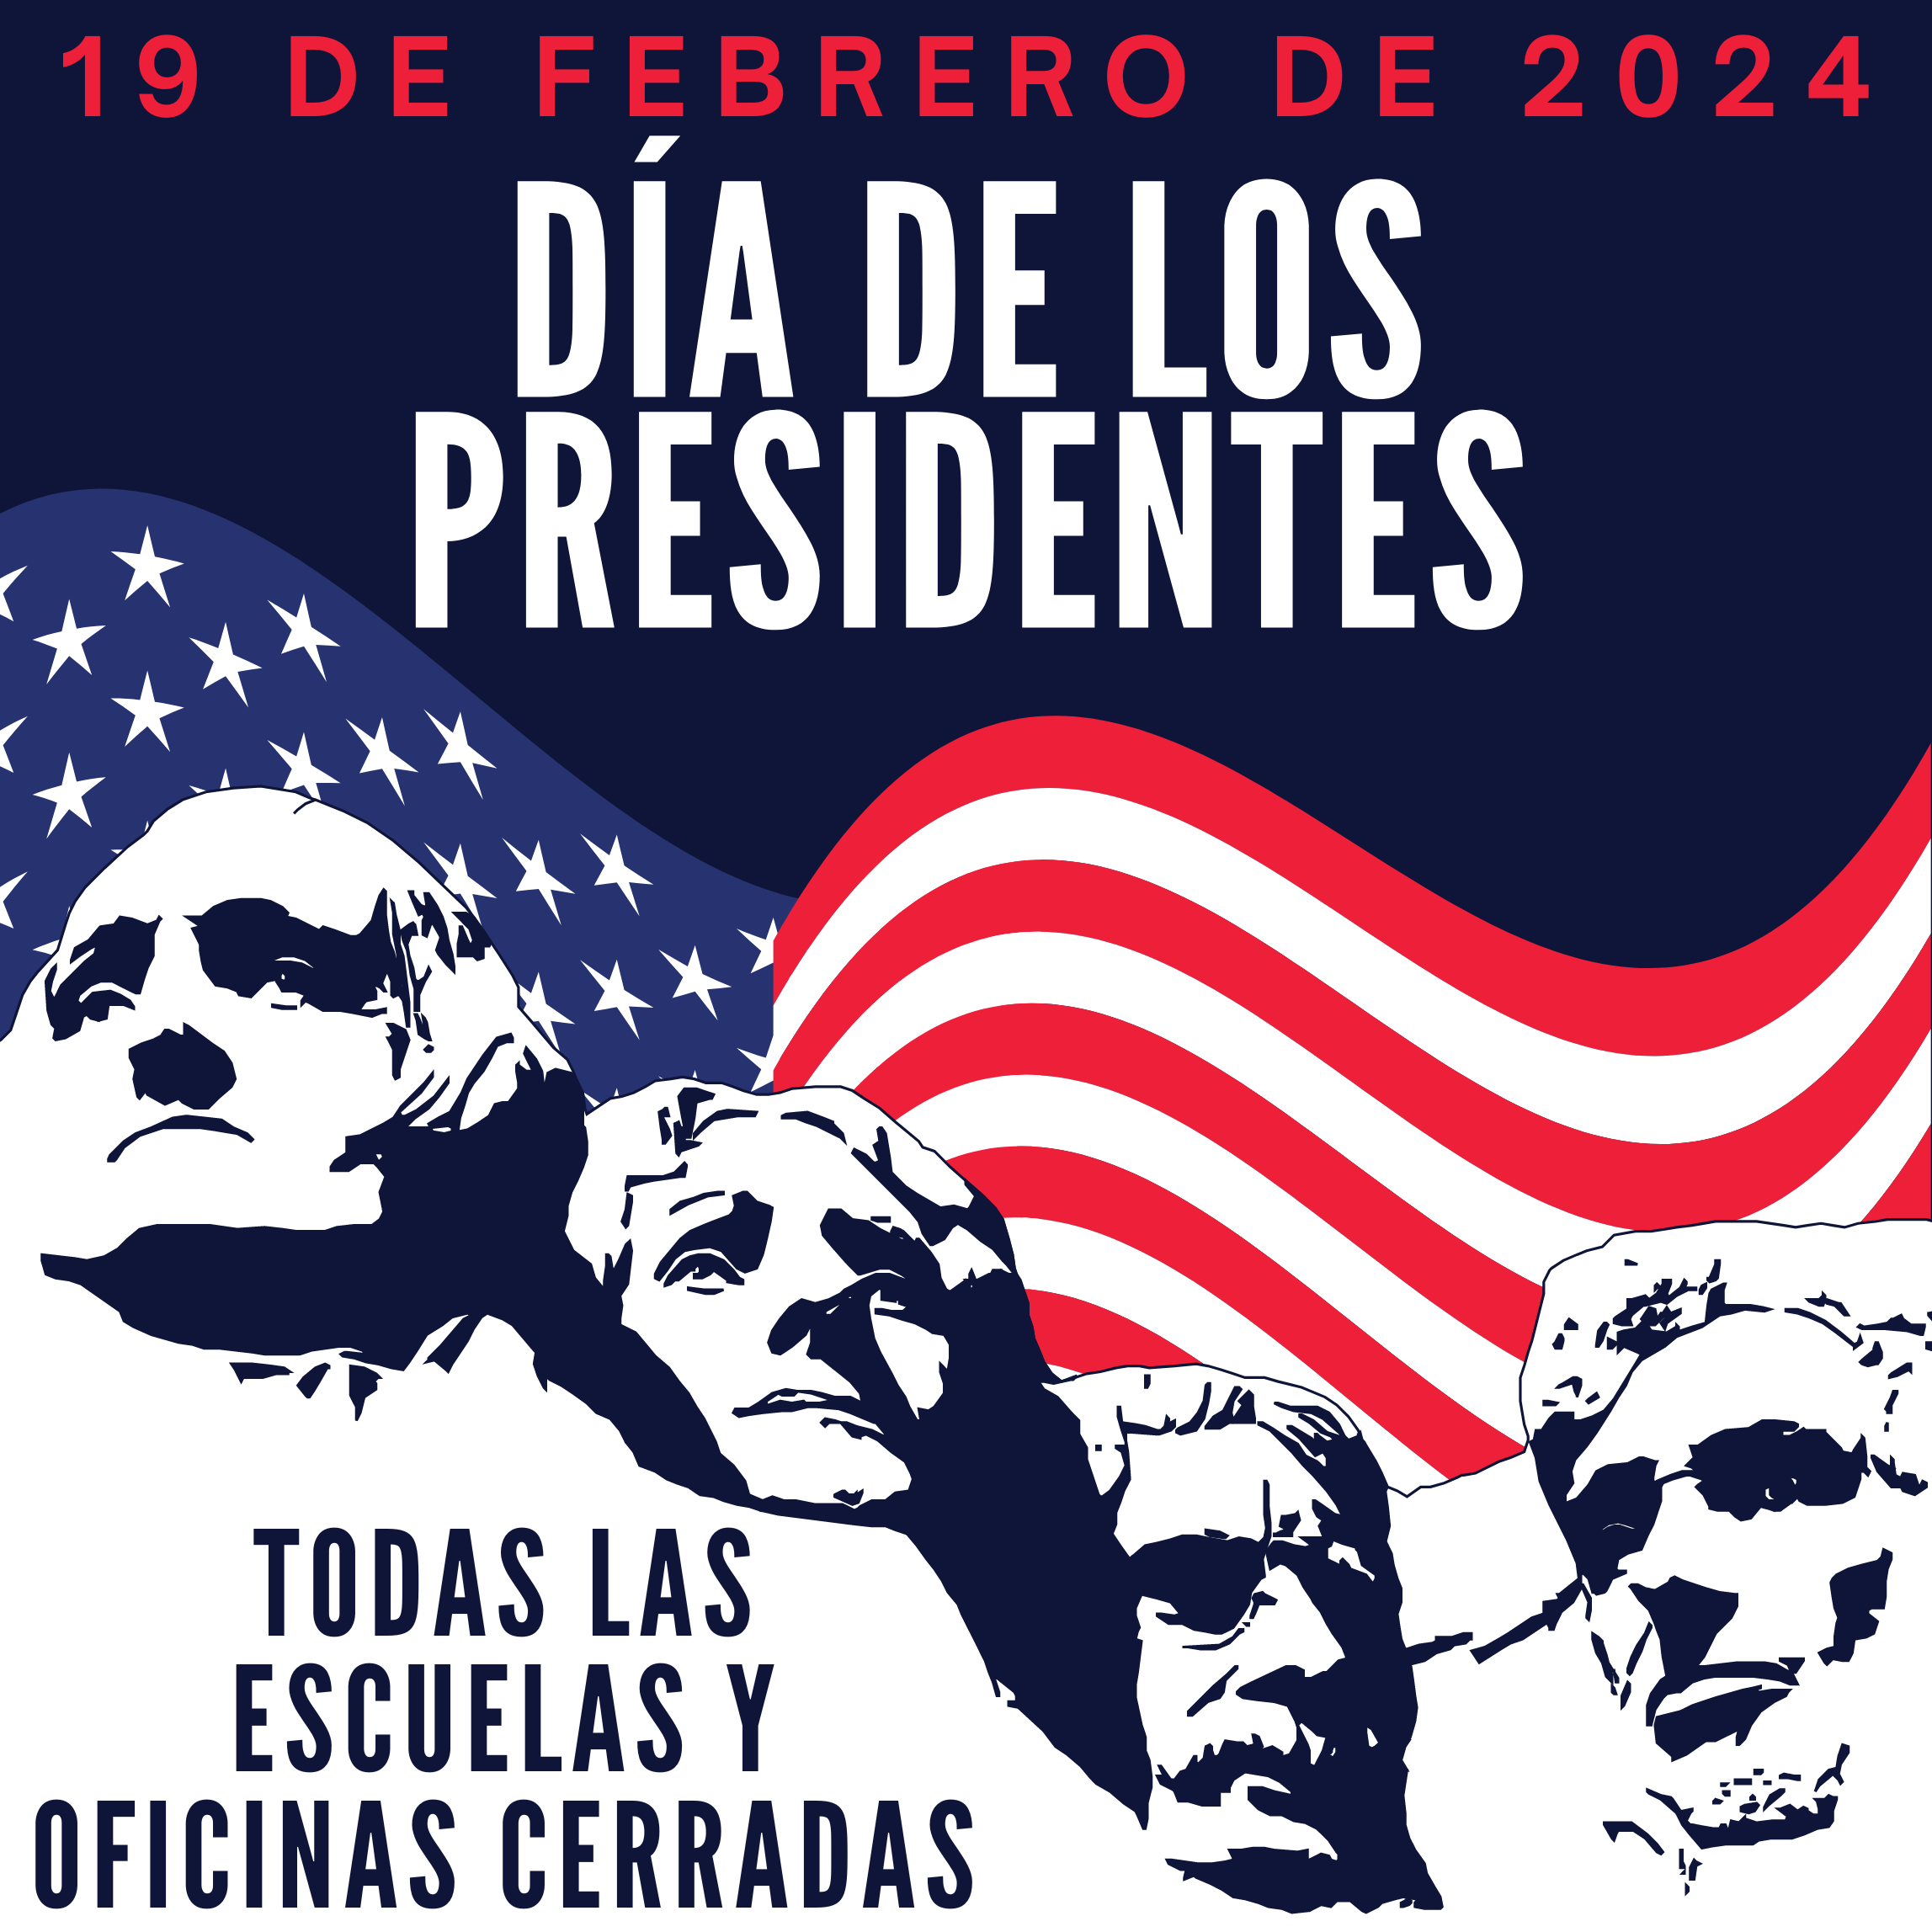 Presidents' Day 2